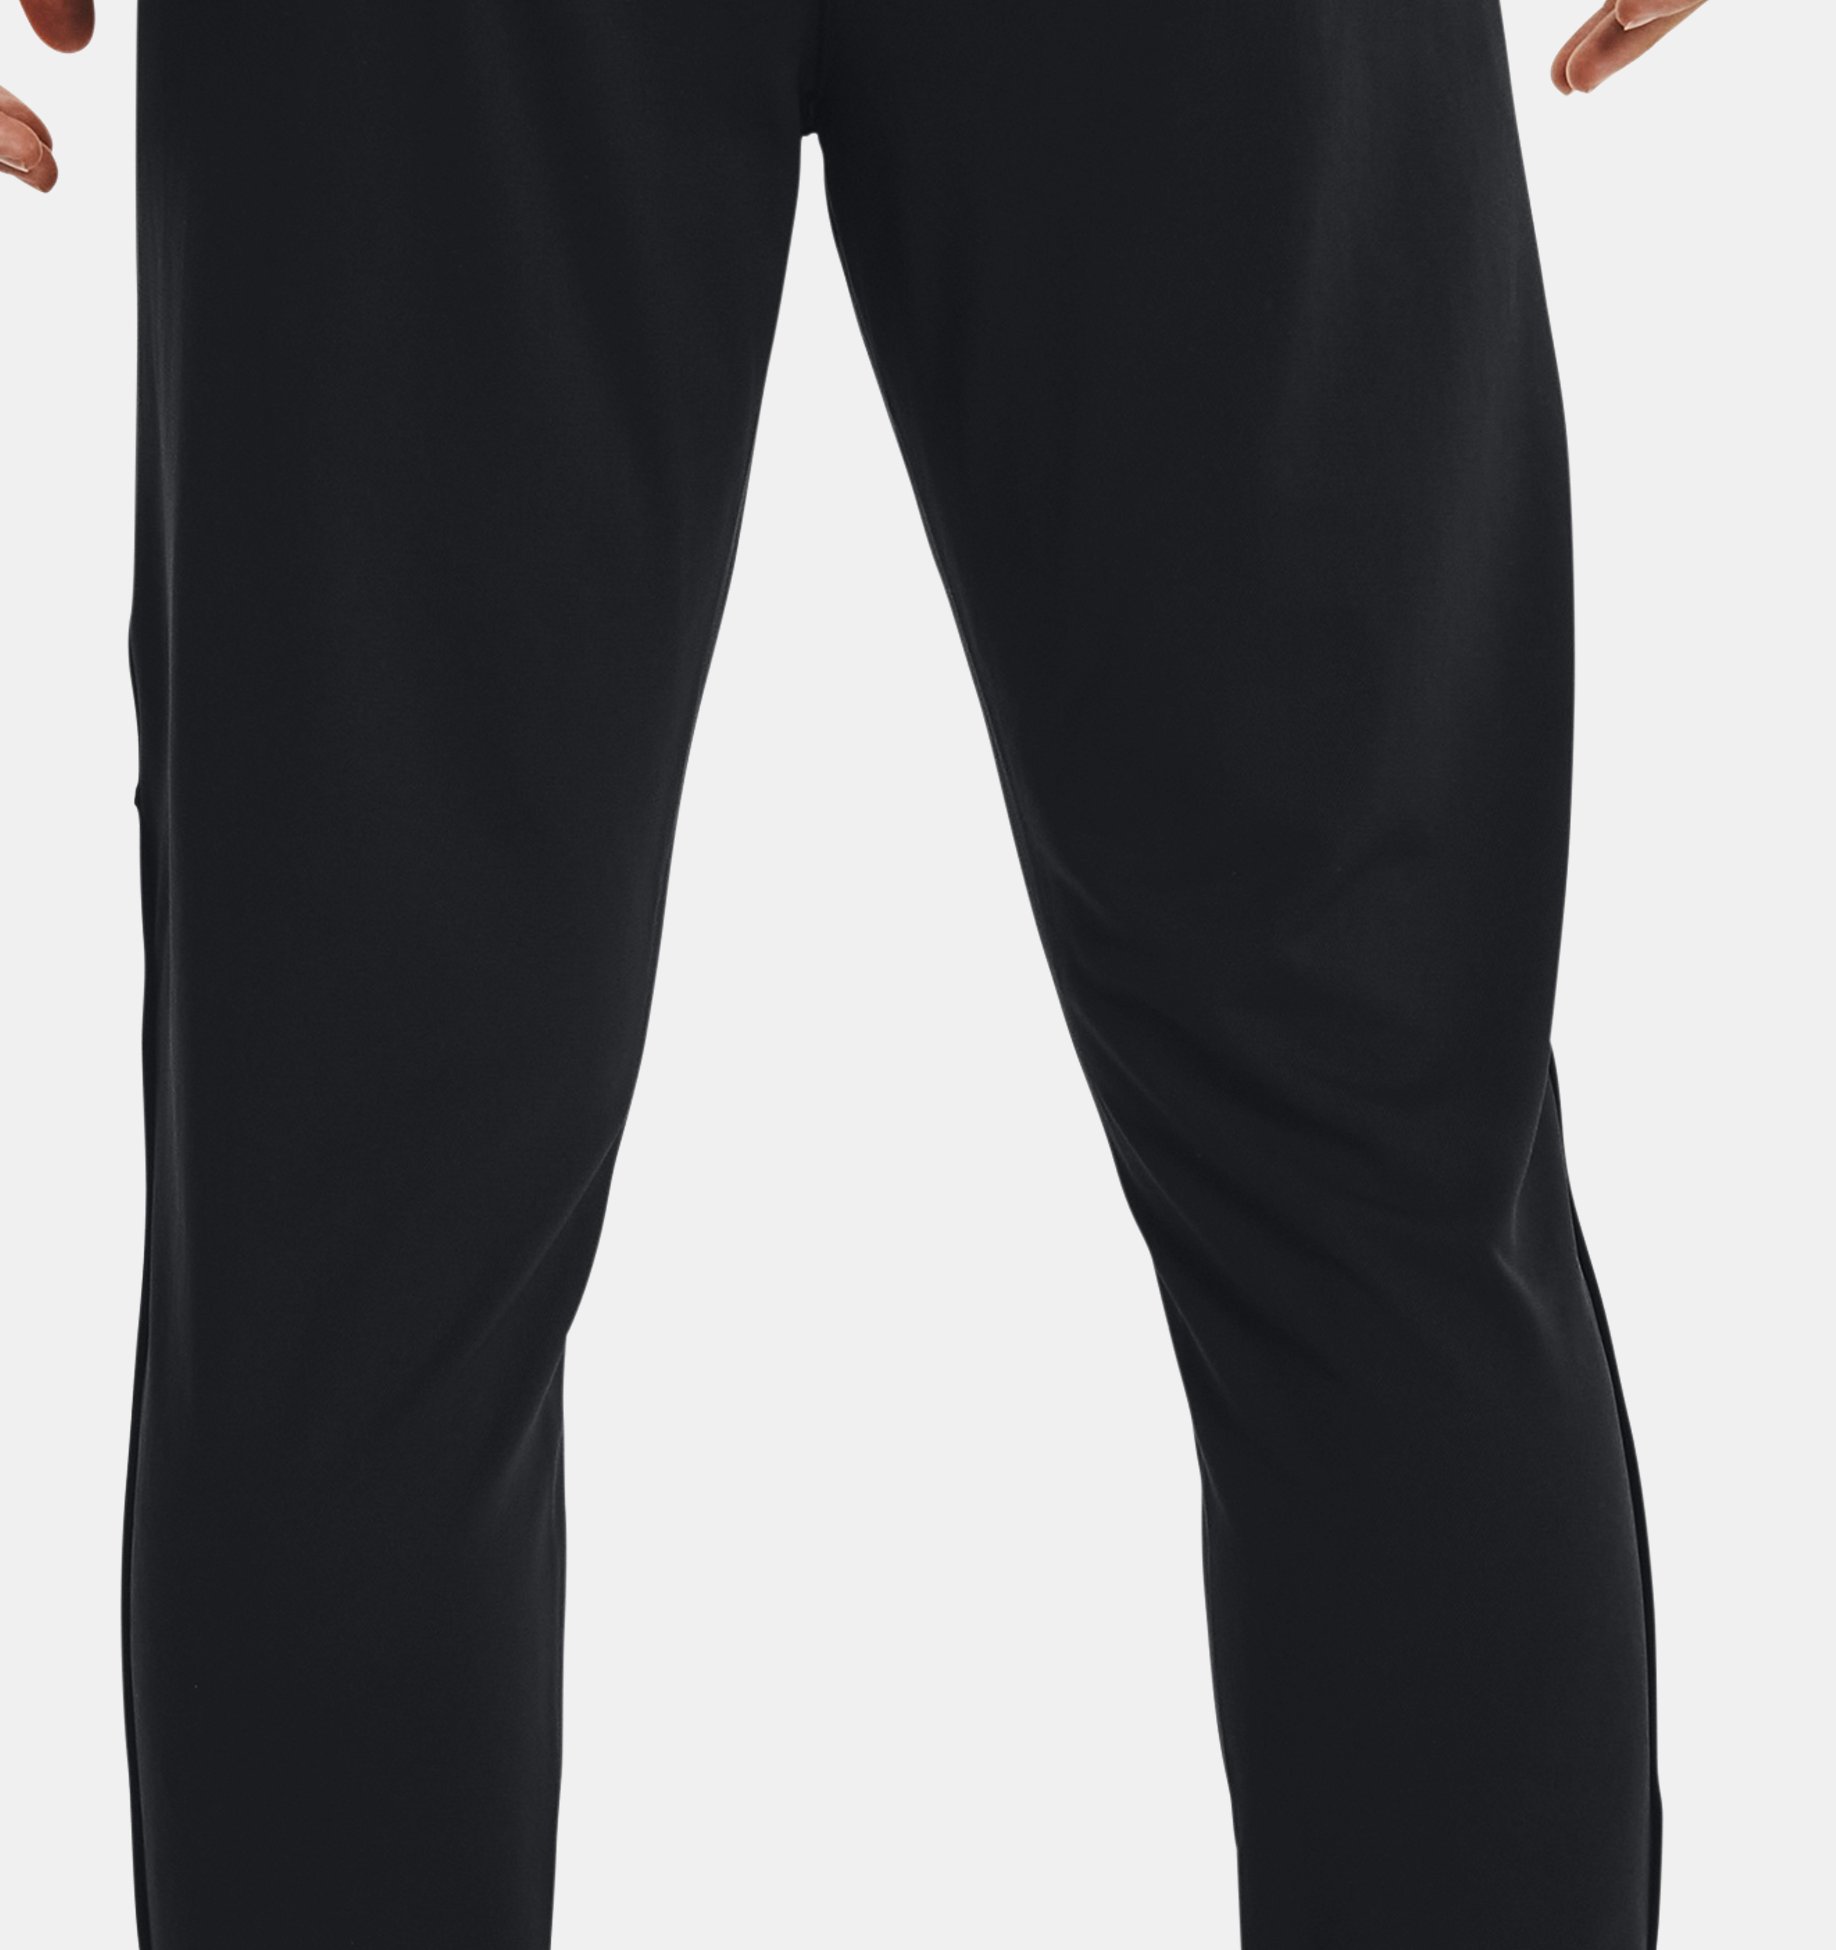 Under Armour Men's Sportstyle Pique Track Pants, Black (Black/White), Small  price in Saudi Arabia,  Saudi Arabia